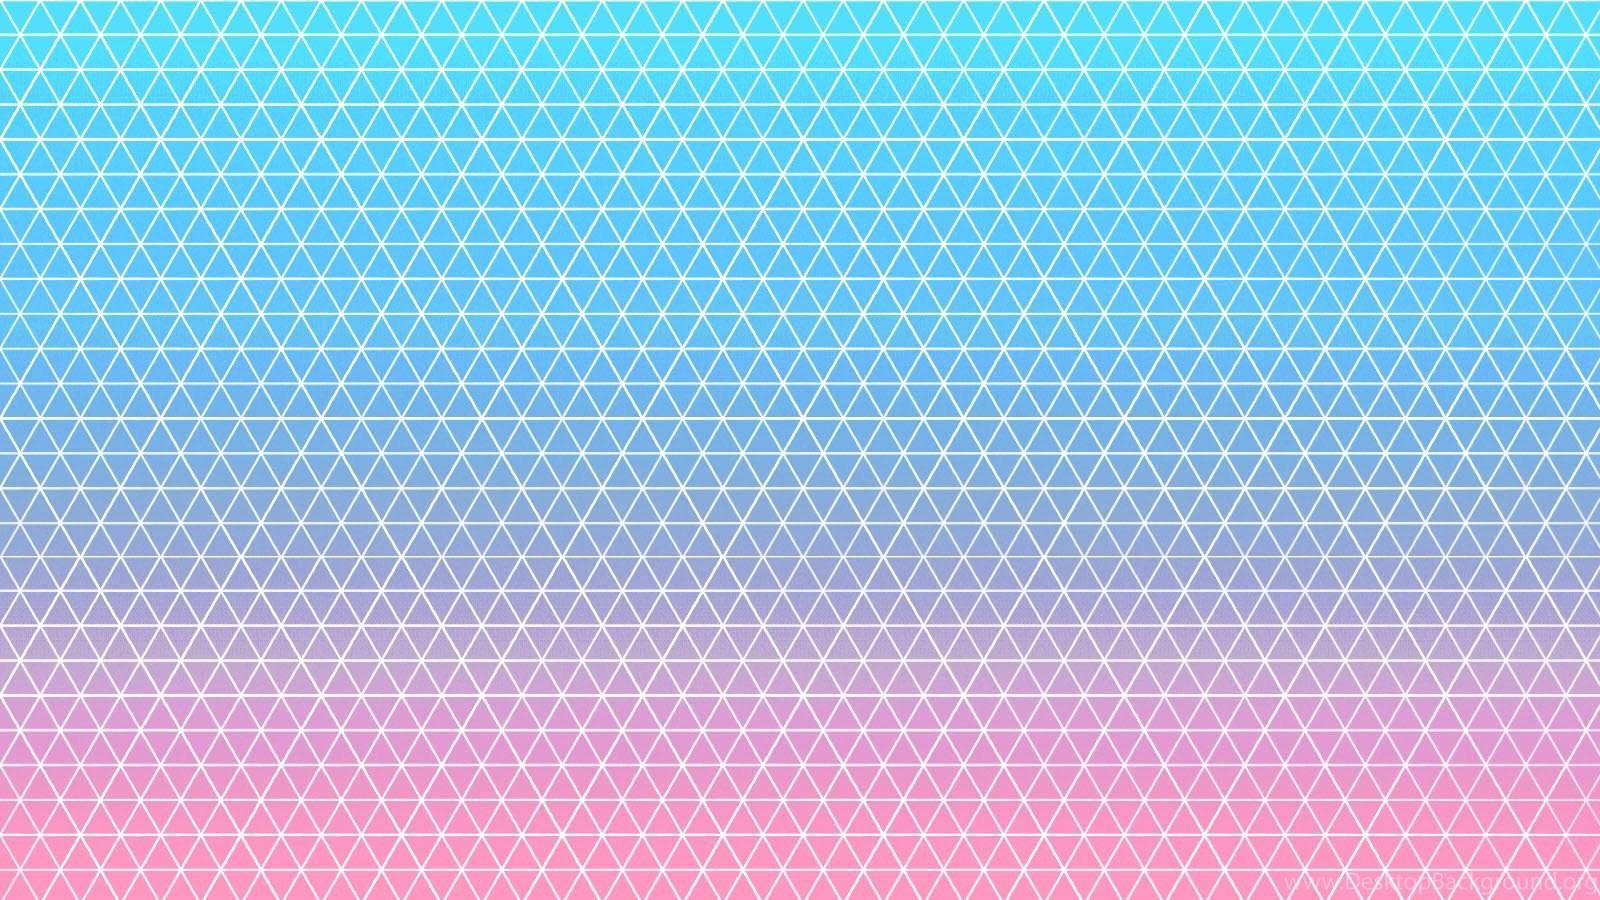 Triangular Grid Aesthetic Teal Pink Gradient Wallpaper